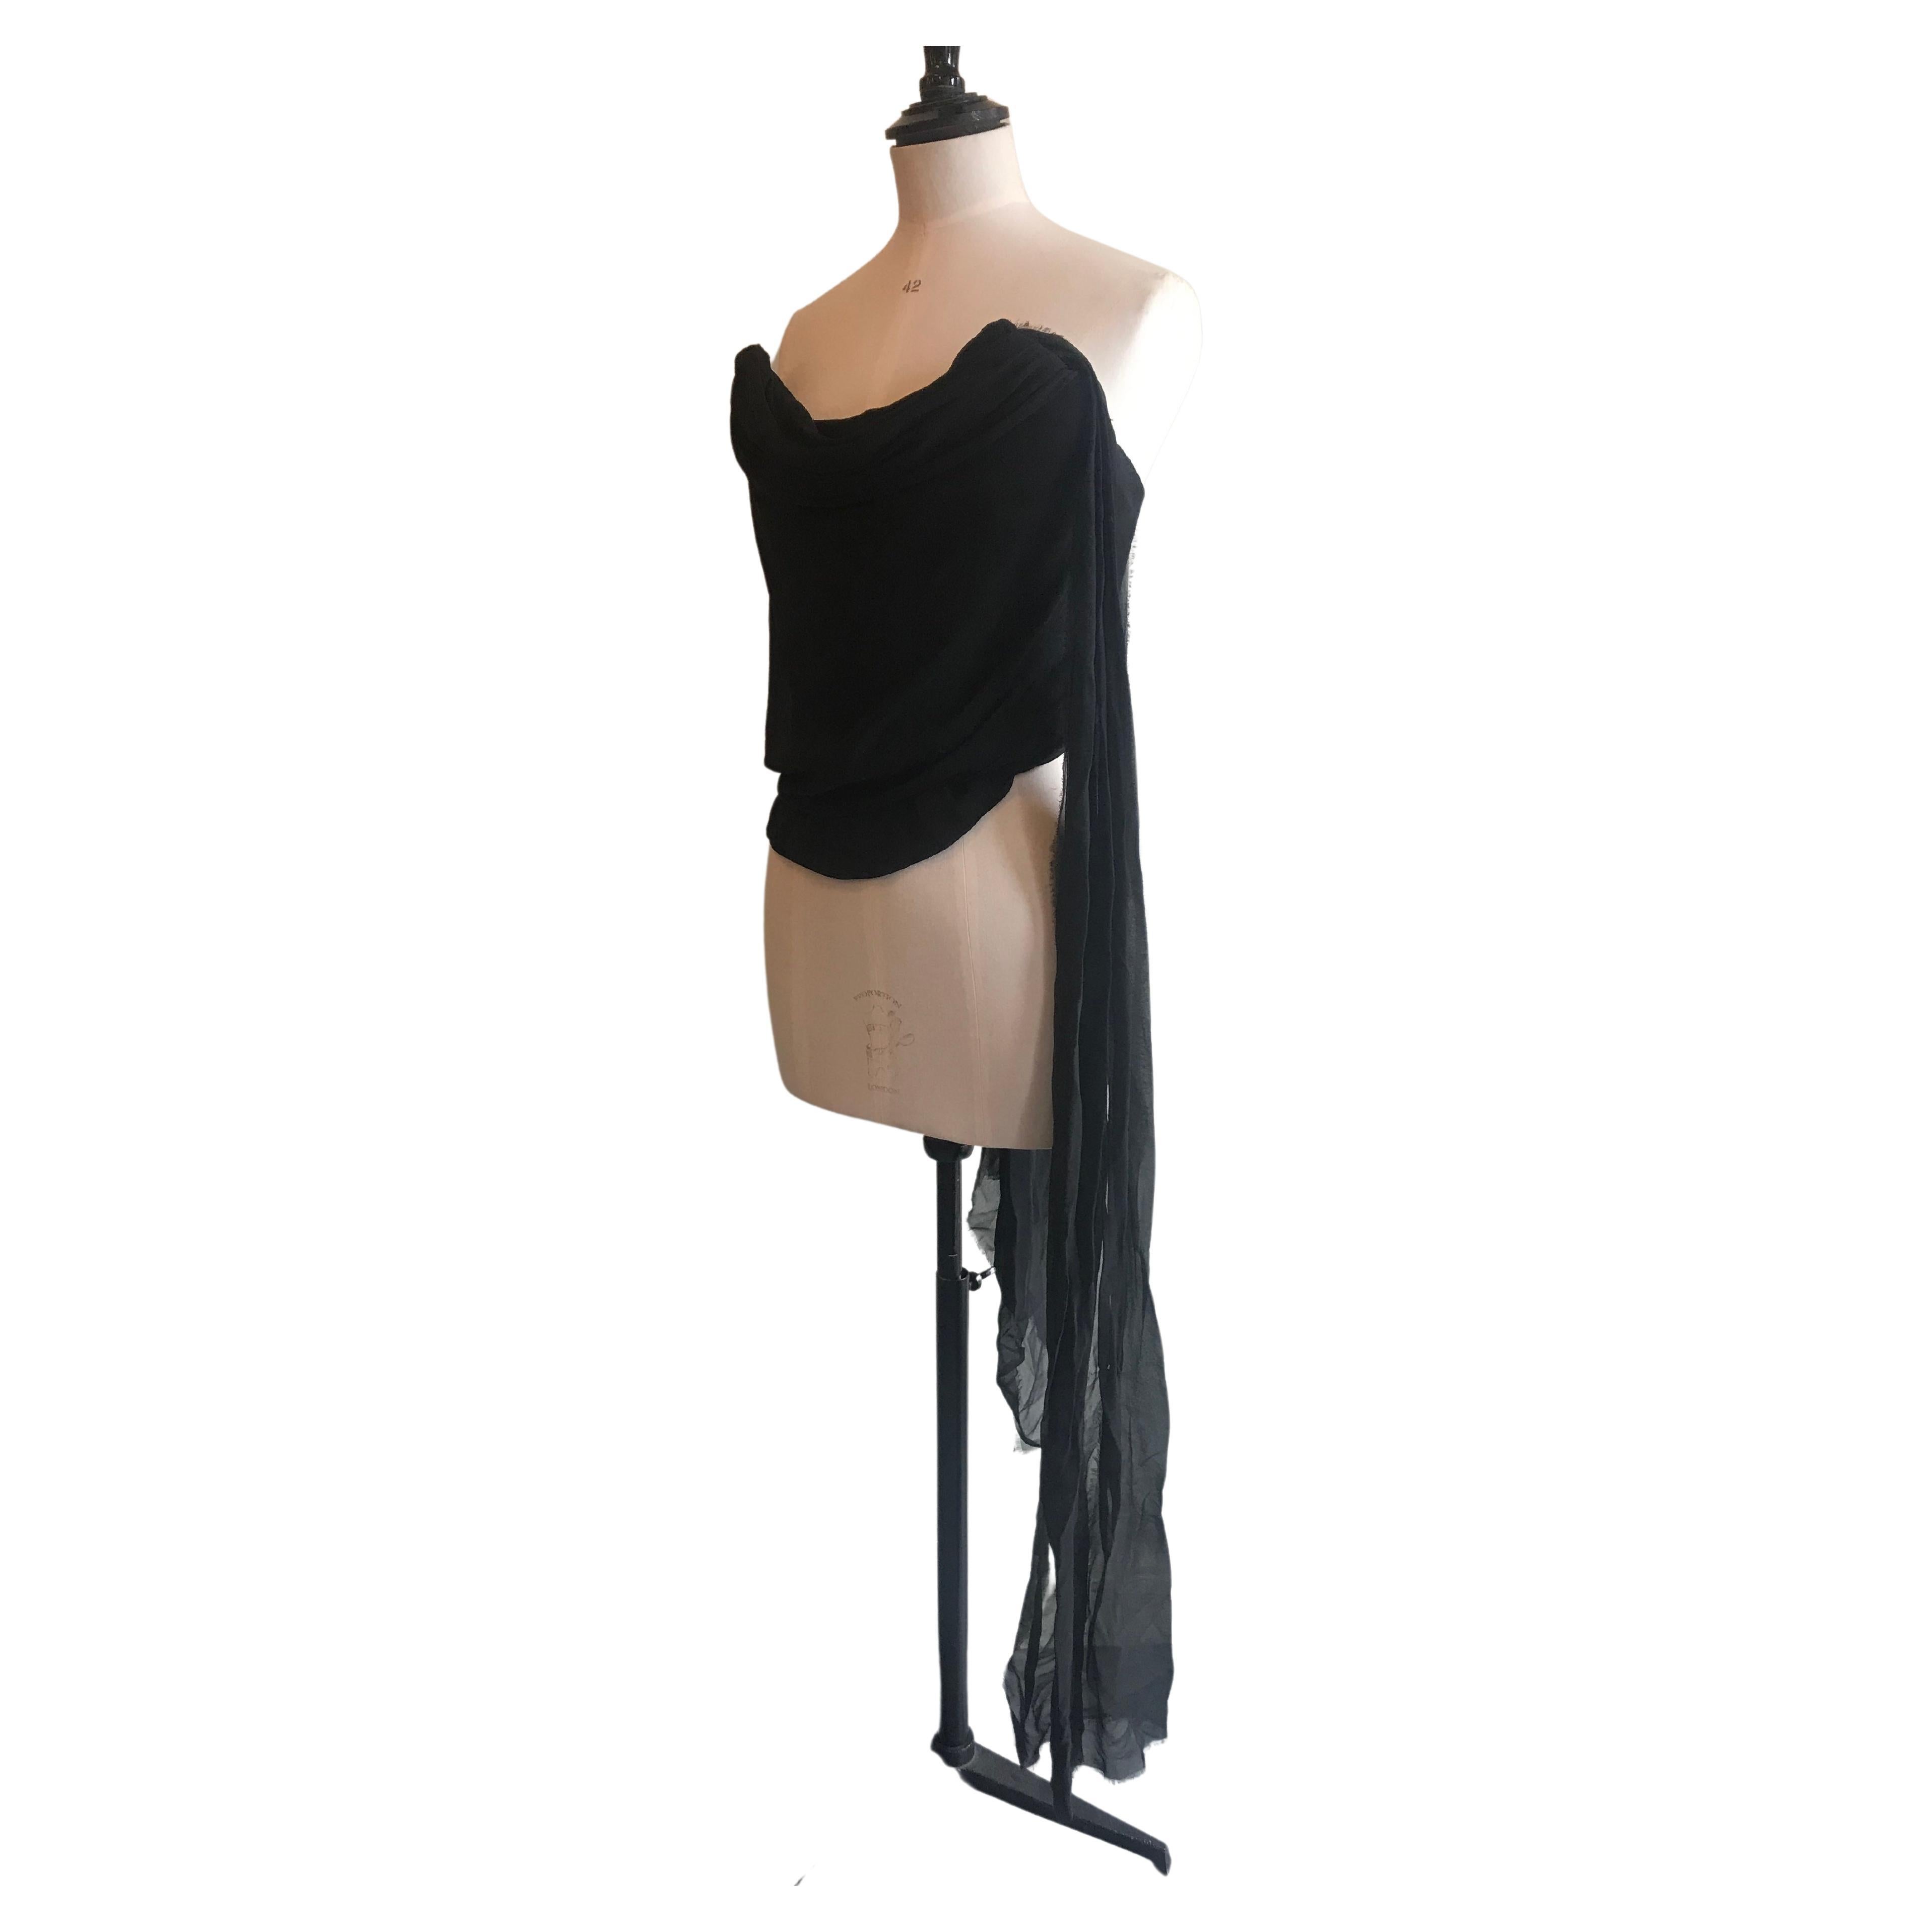 Vivienne Westwood Black Vintage Silk Chiffon Corset circa 2004